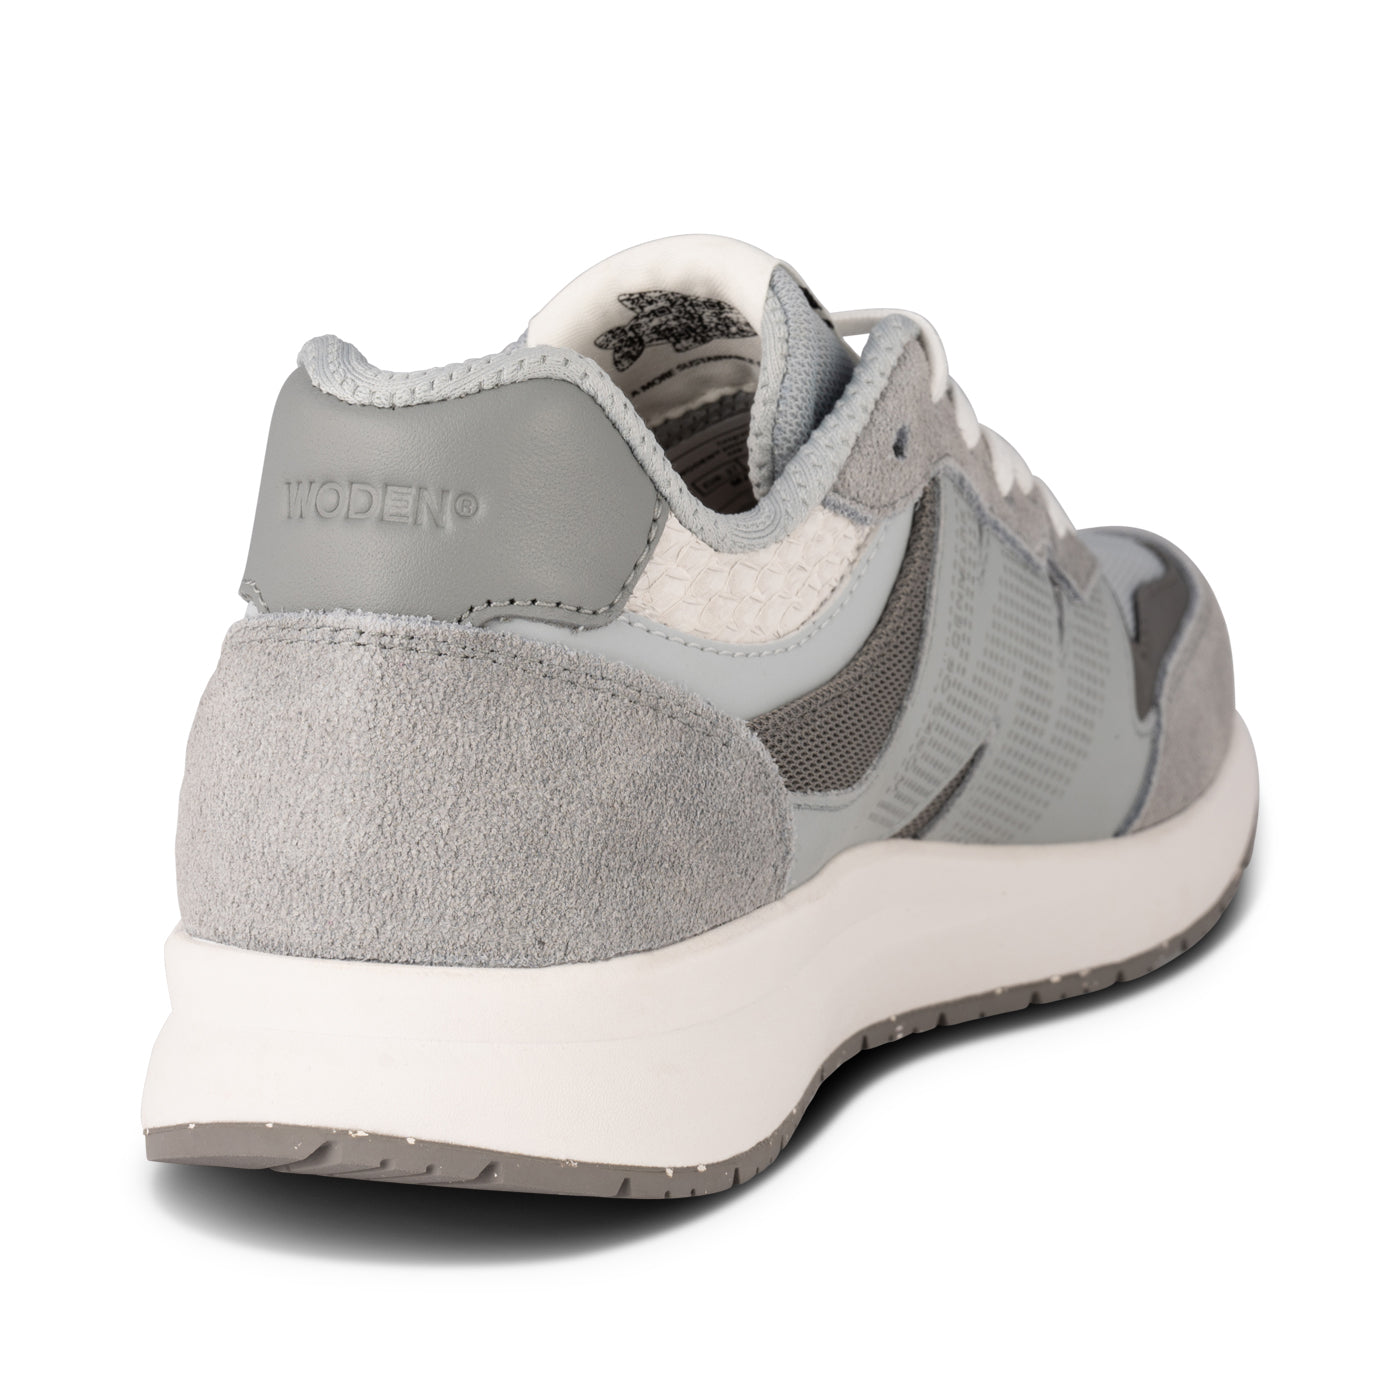 WODEN Rigmor Reflective Sneakers 072 Grey Multi